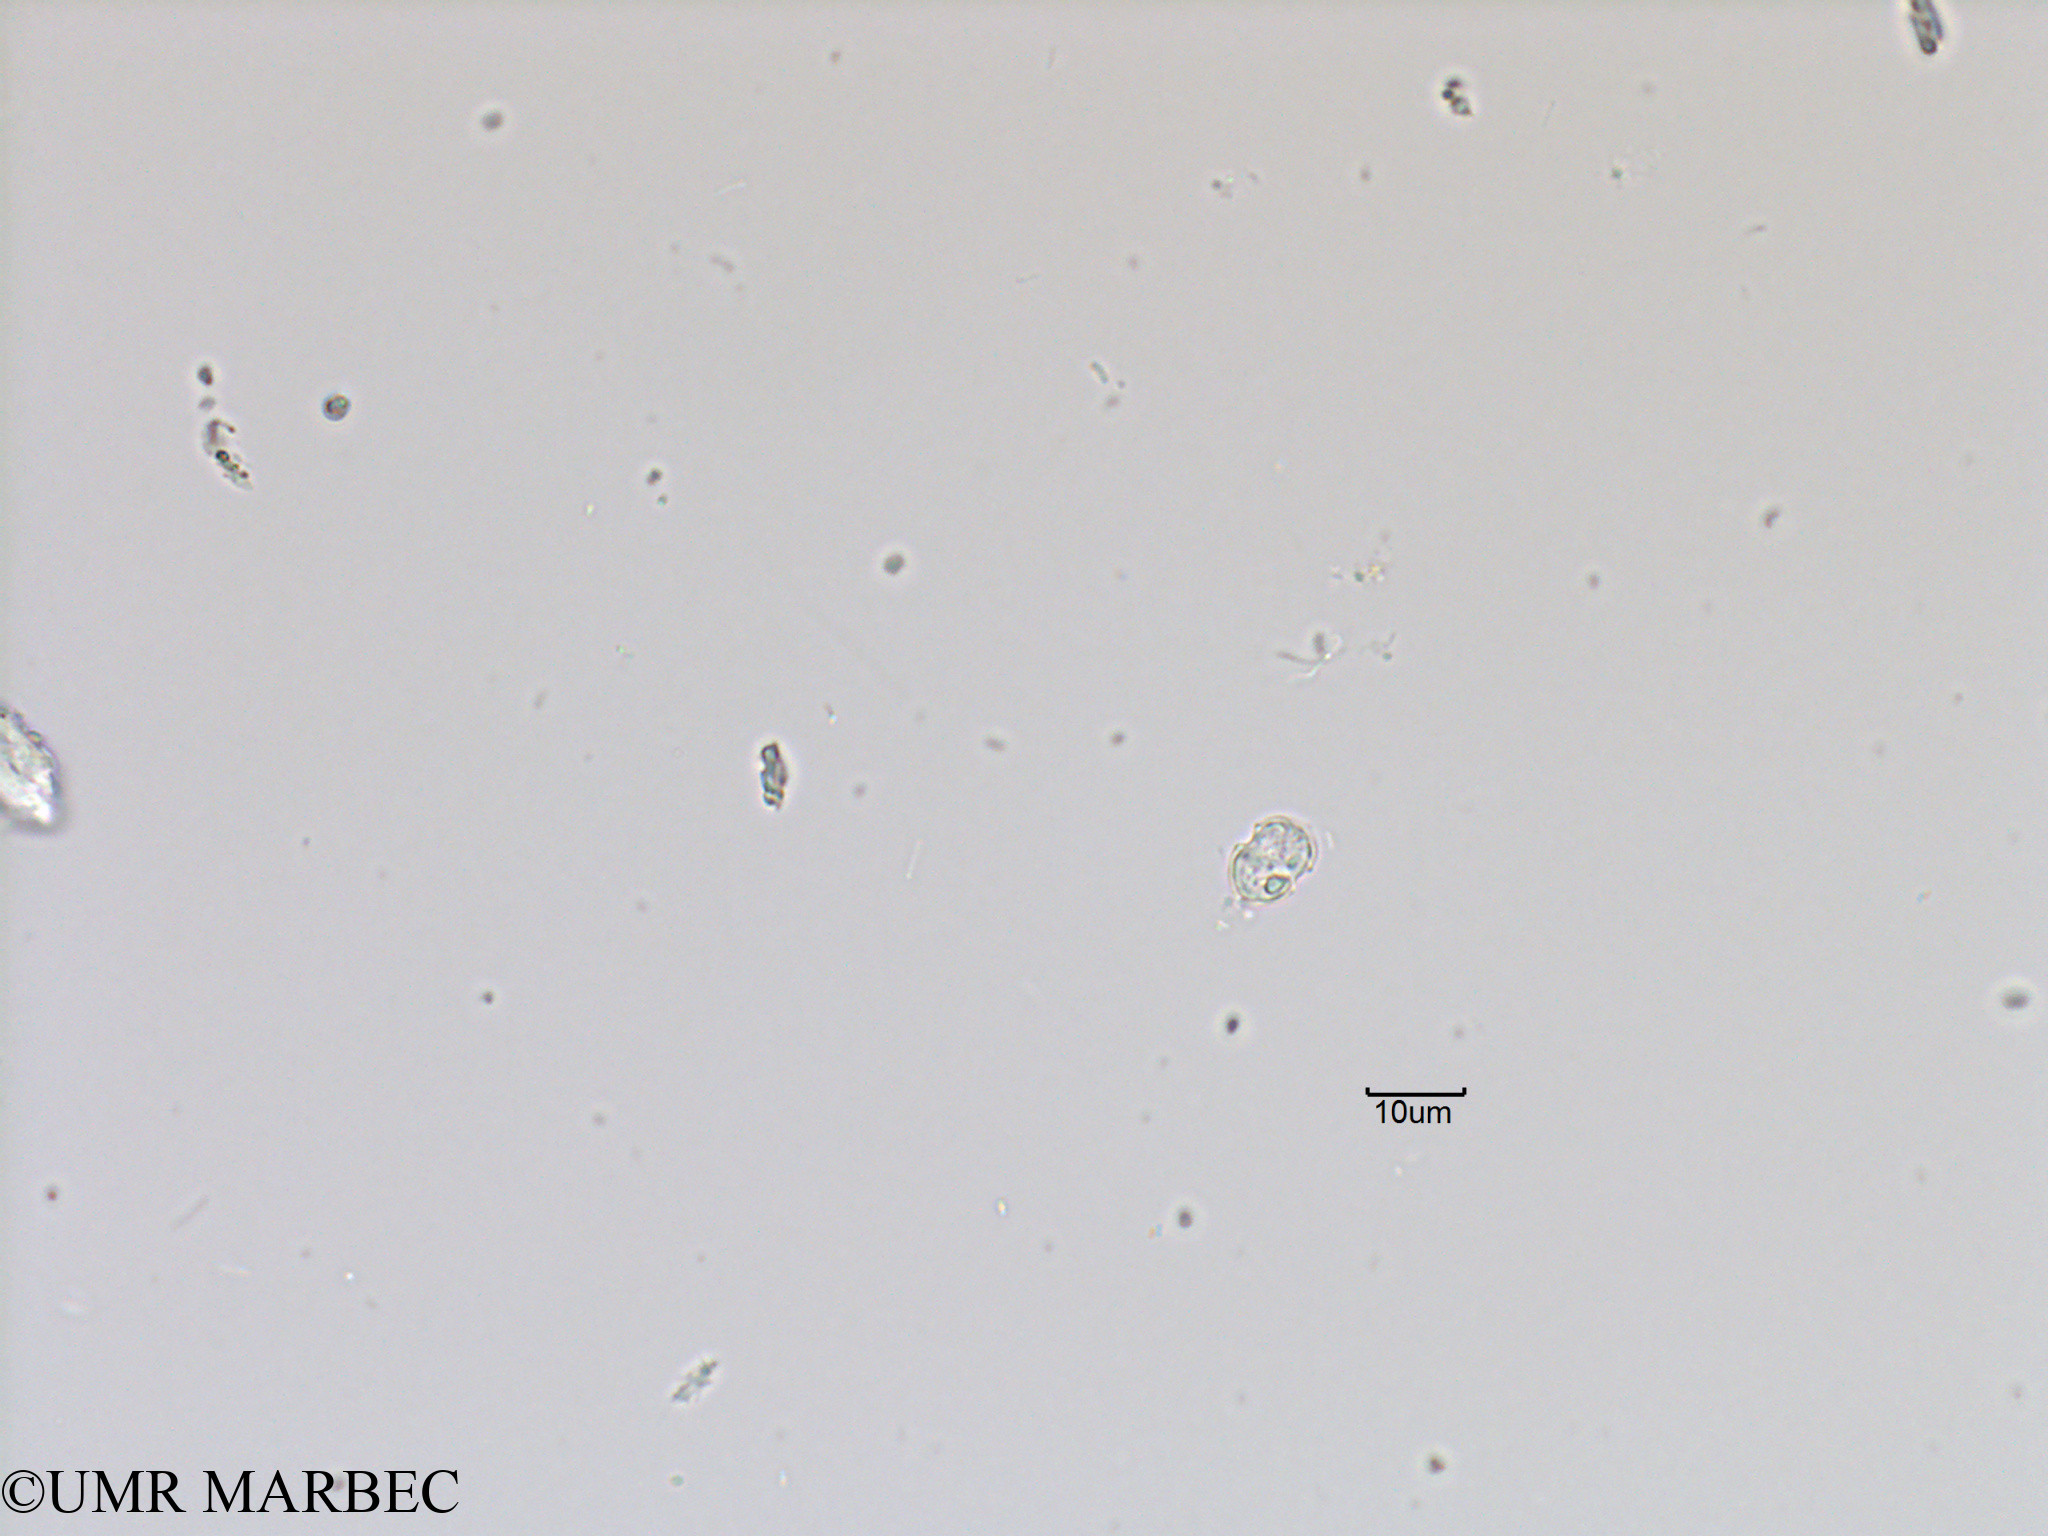 phyto/Bizerte/bizerte_bay/RISCO November 2015/Azadinium spp (Baie_T5-ACW1-Petit dino- cf heterocapsa minima ou azadinium-18).tif(copy).jpg